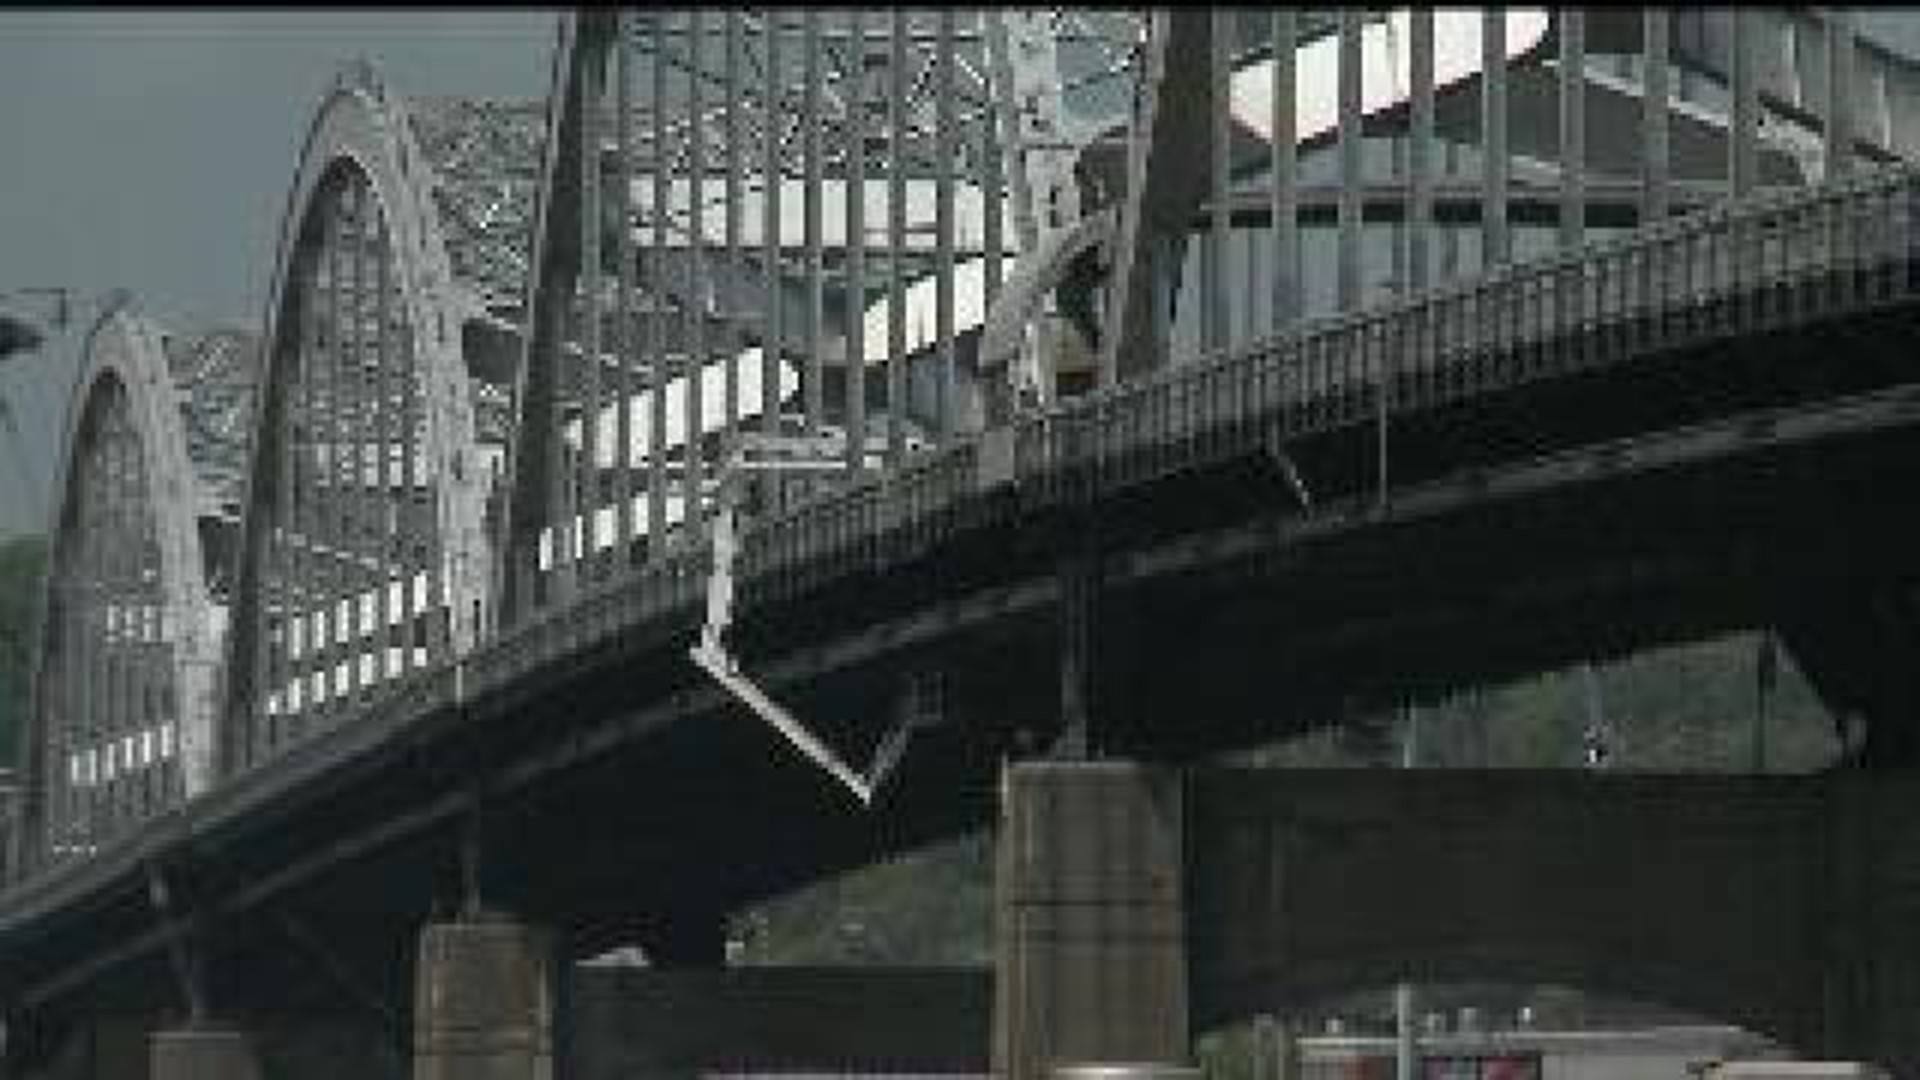 Centennial Bridge Closes For 1 Month